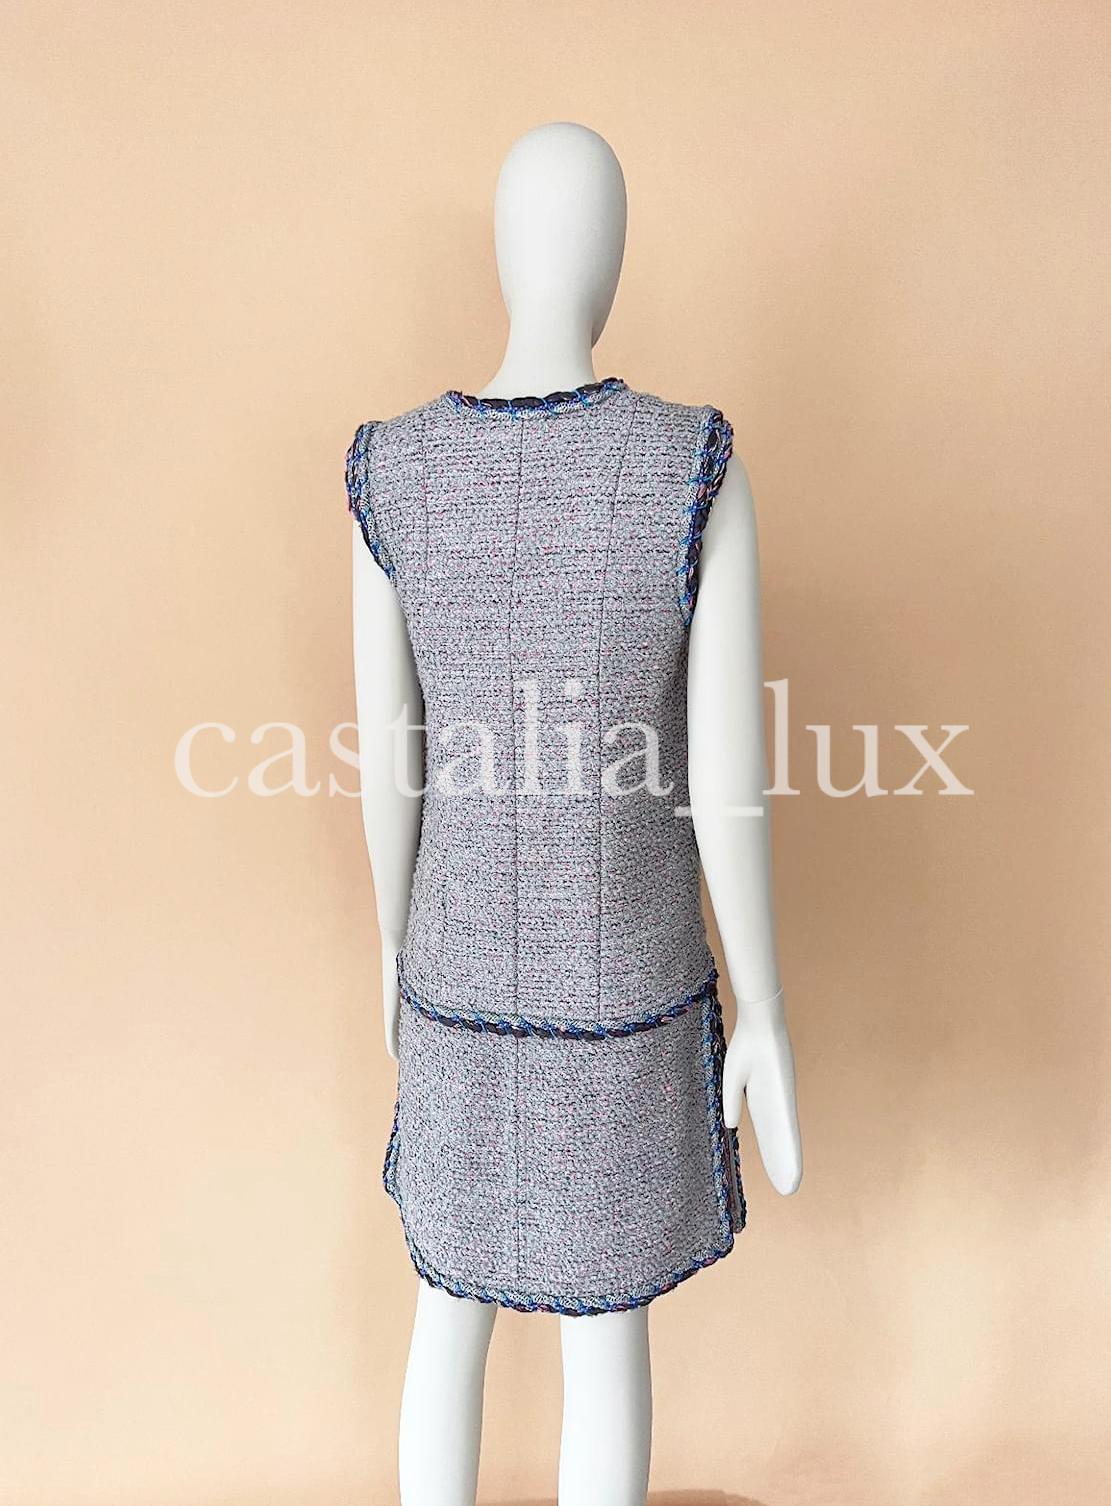 Chanel New Icon Cara Delevingne Runway Tweed Dress 7